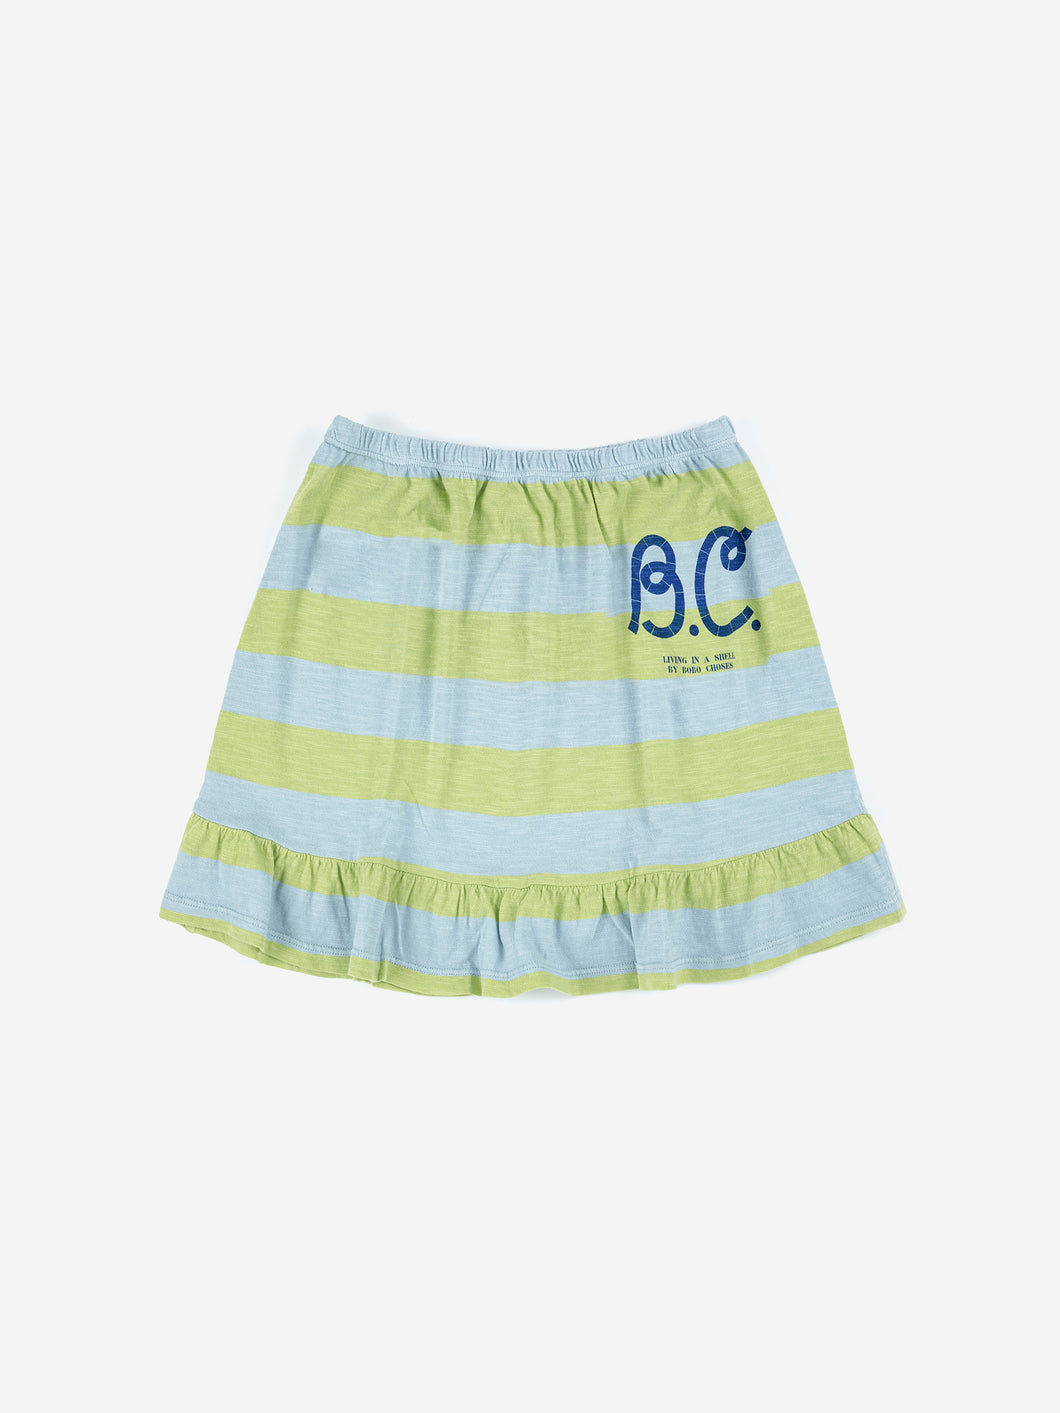 Bobo Choses / KID / Skirt / Yellow Stripes